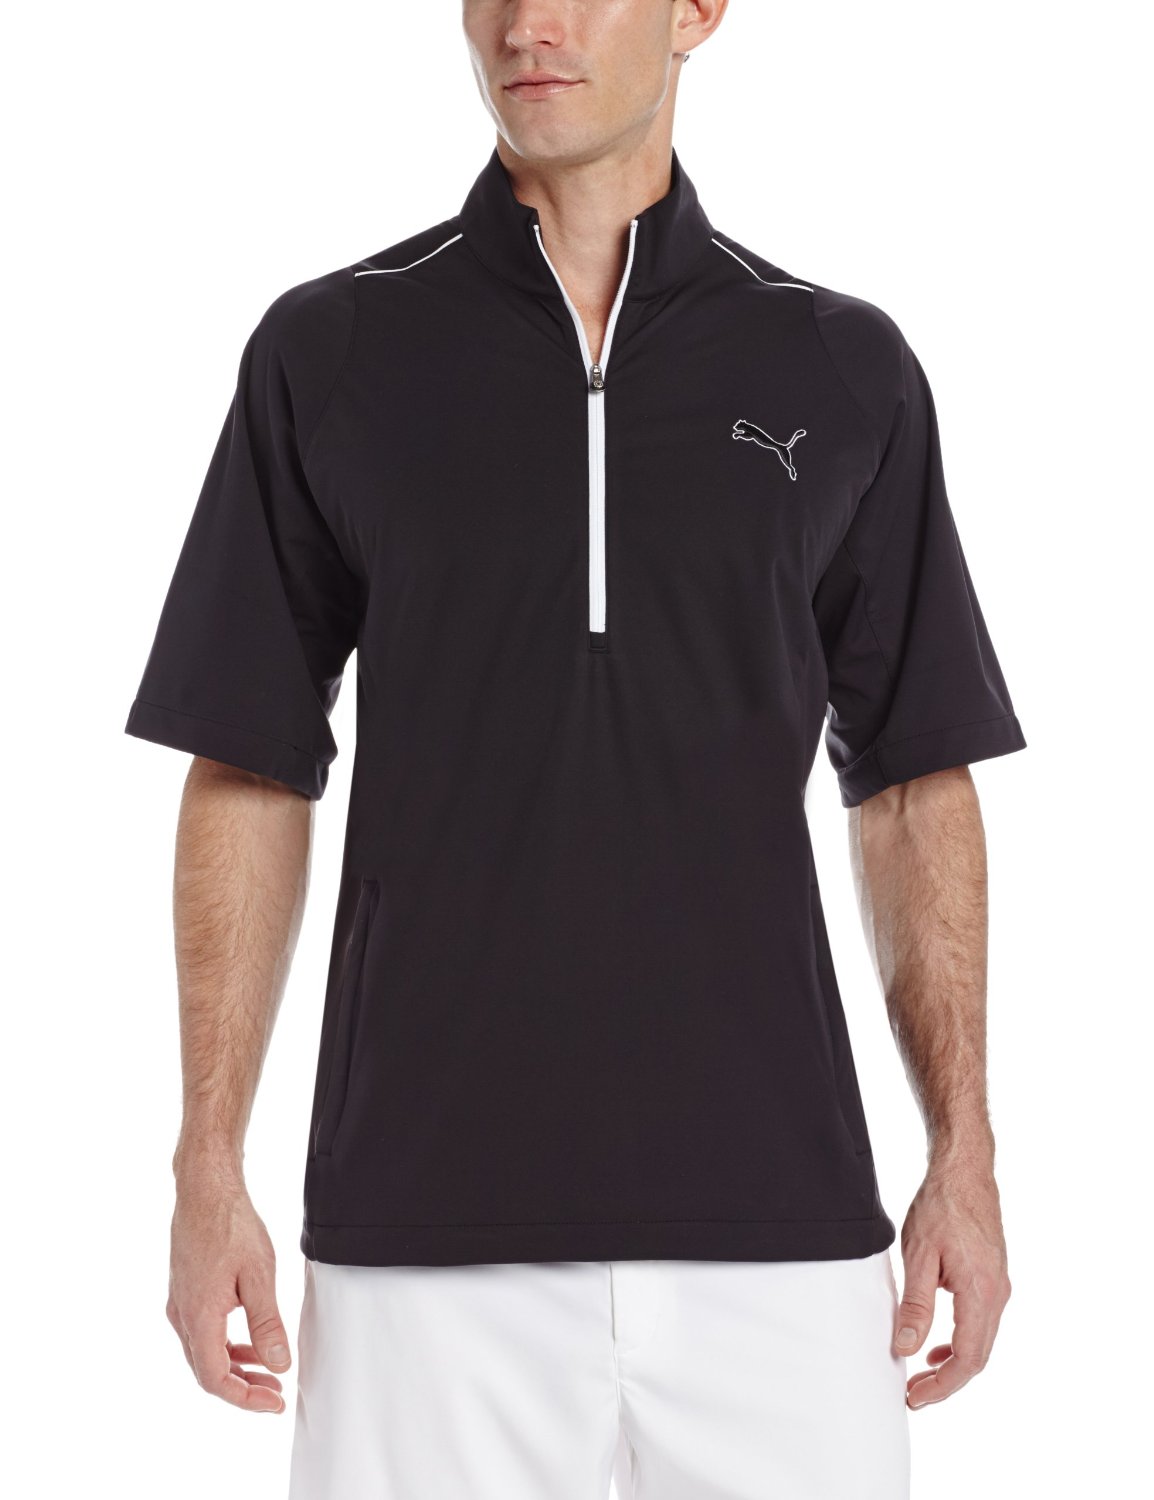 Puma Short Sleeve Storm Golf Jackets